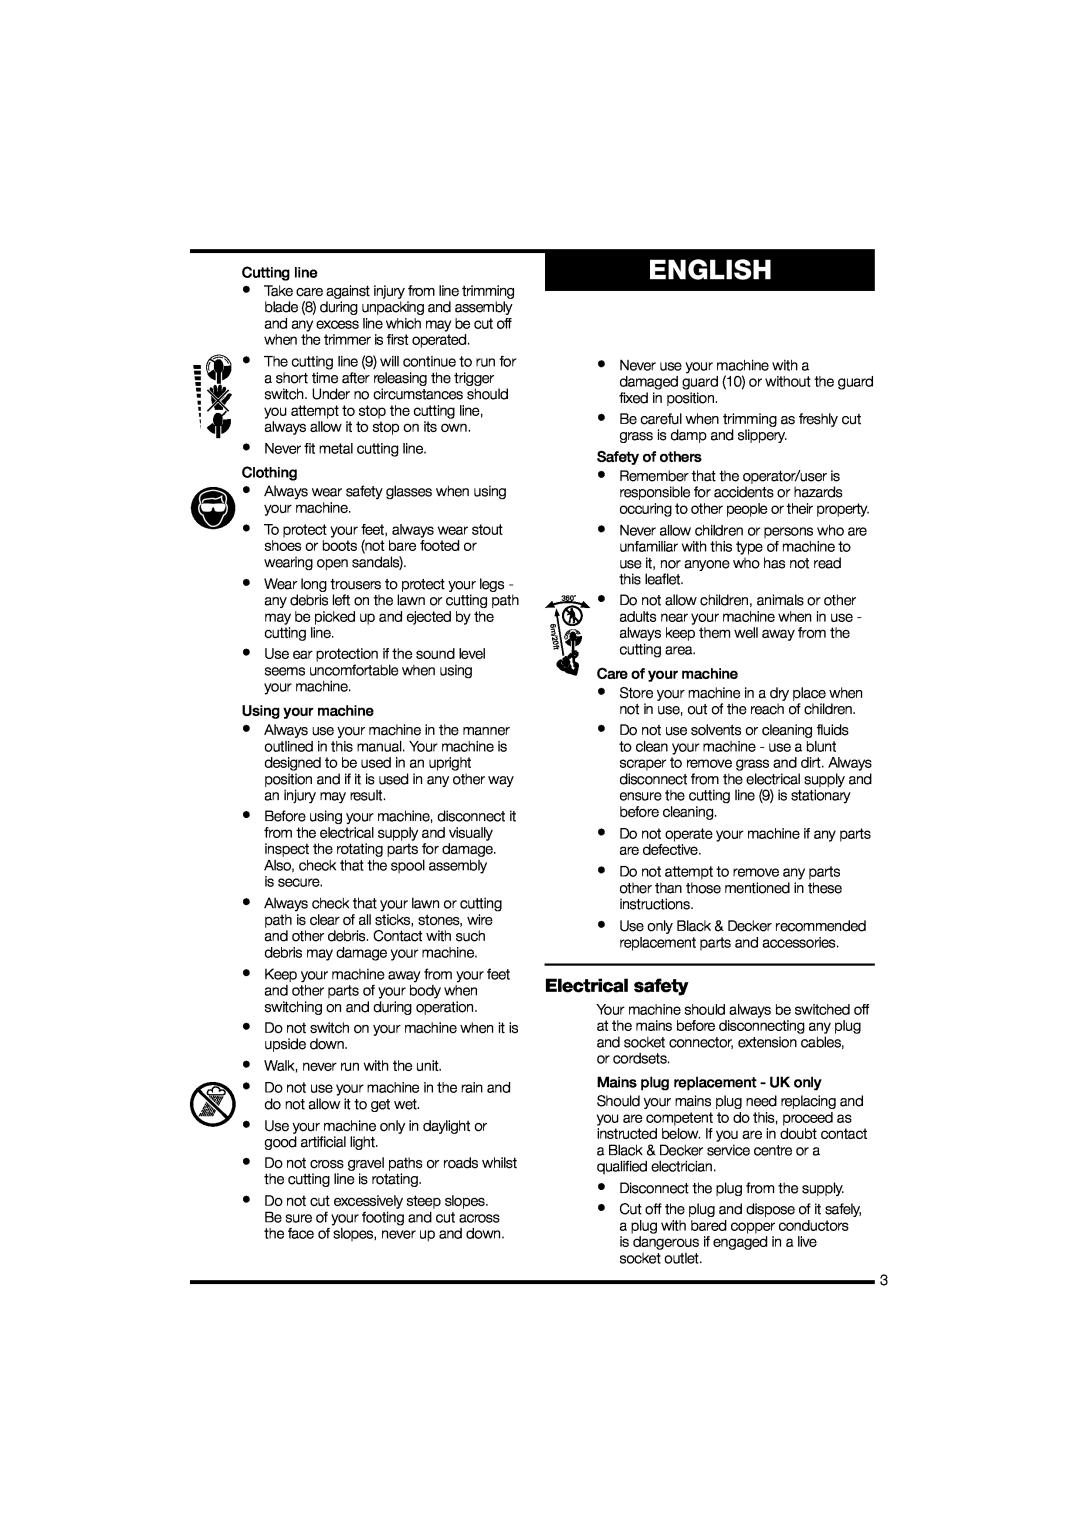 Black & Decker GL530 instruction manual English, Electrical safety 